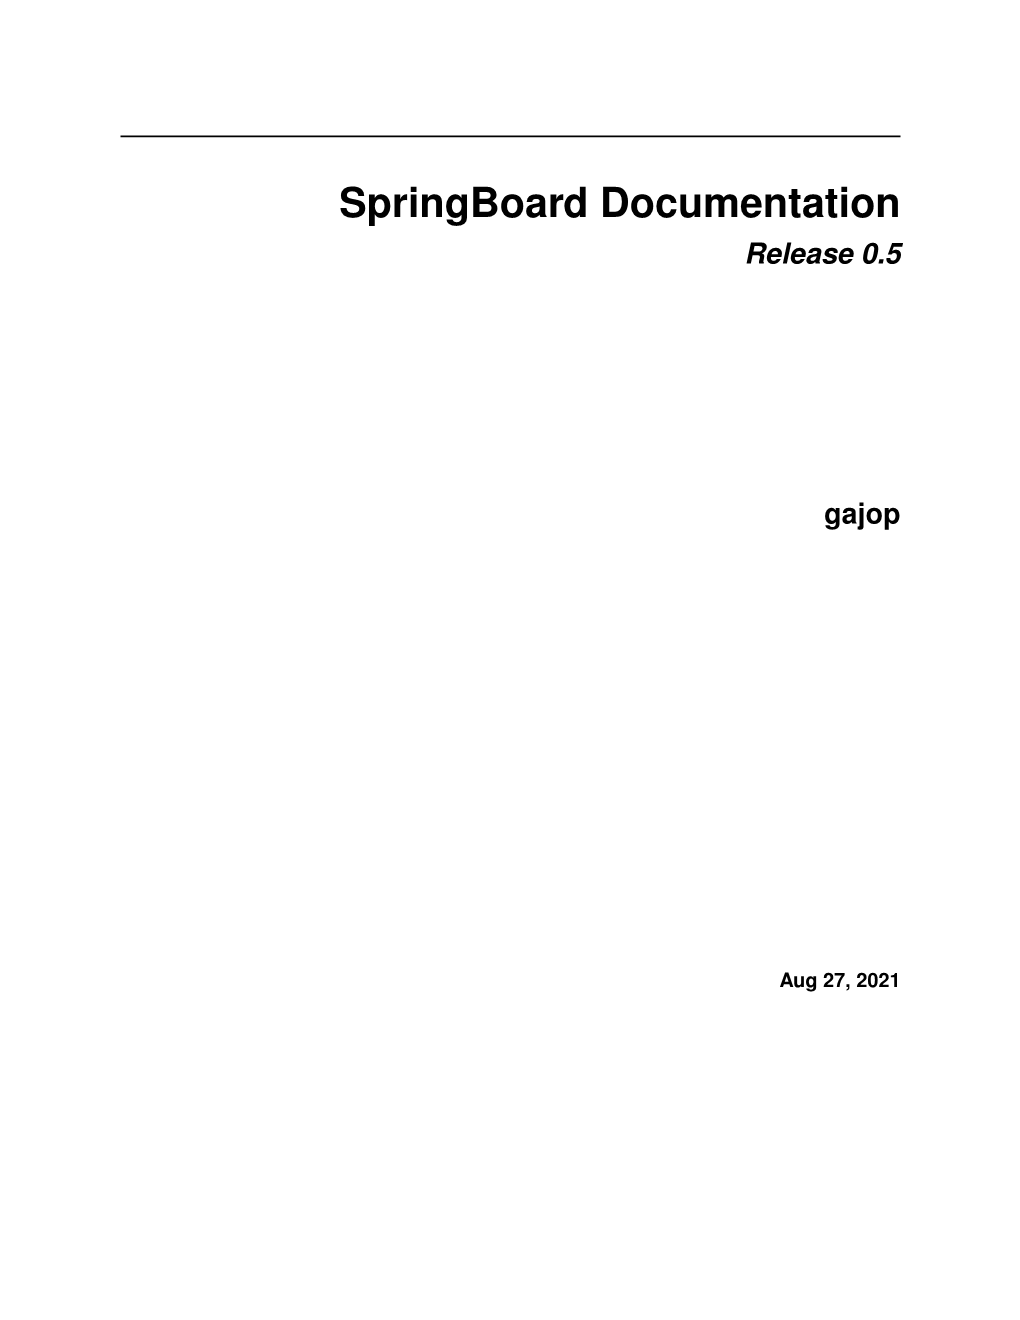 Springboard Documentation Release 0.5